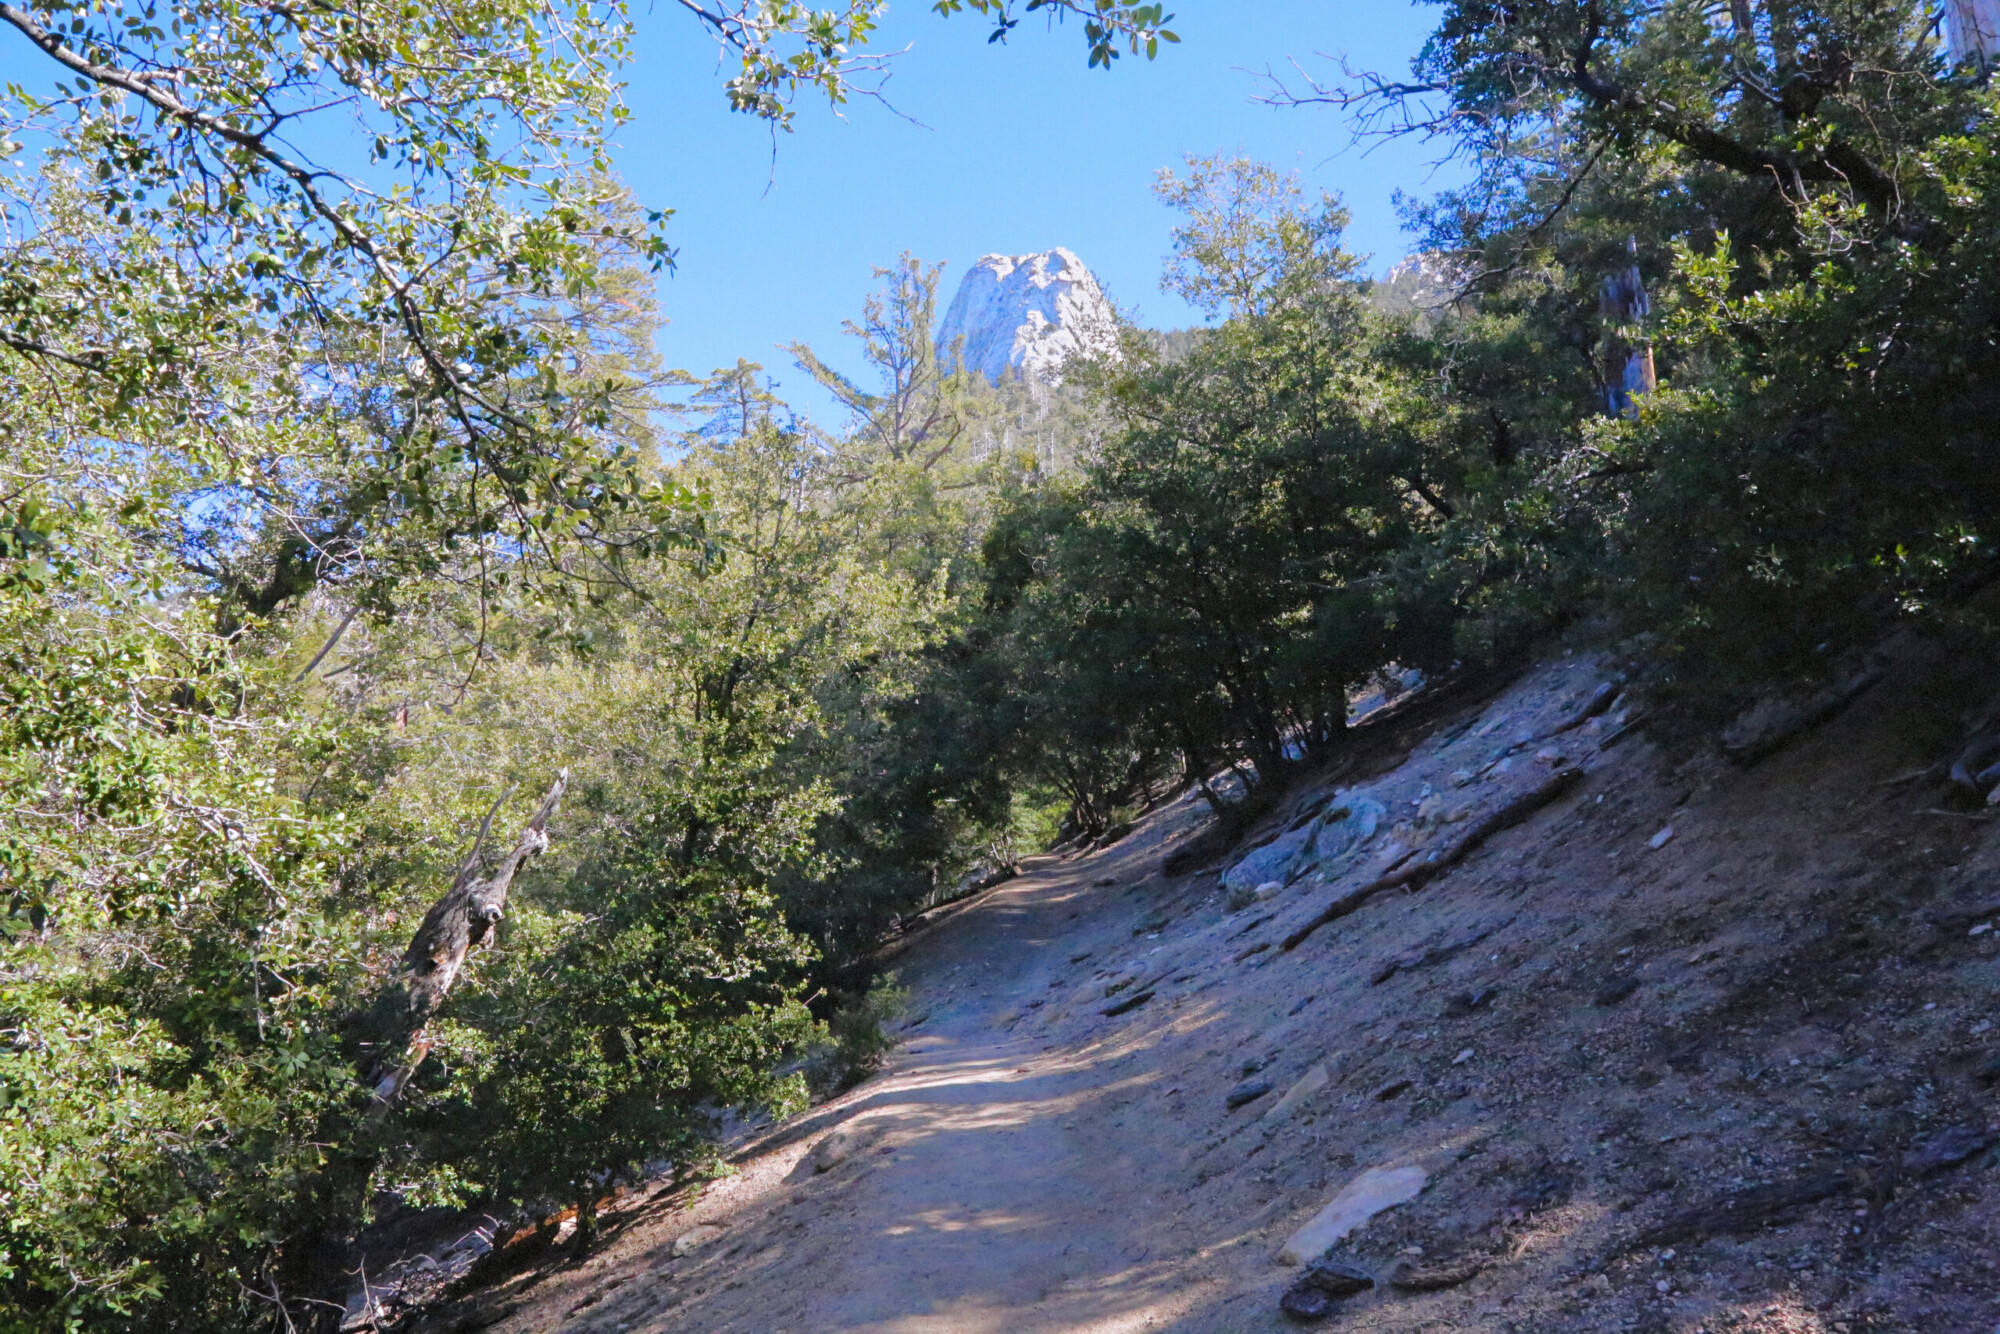 Tahquitz Peak hiking trail in Idyllwild, California.